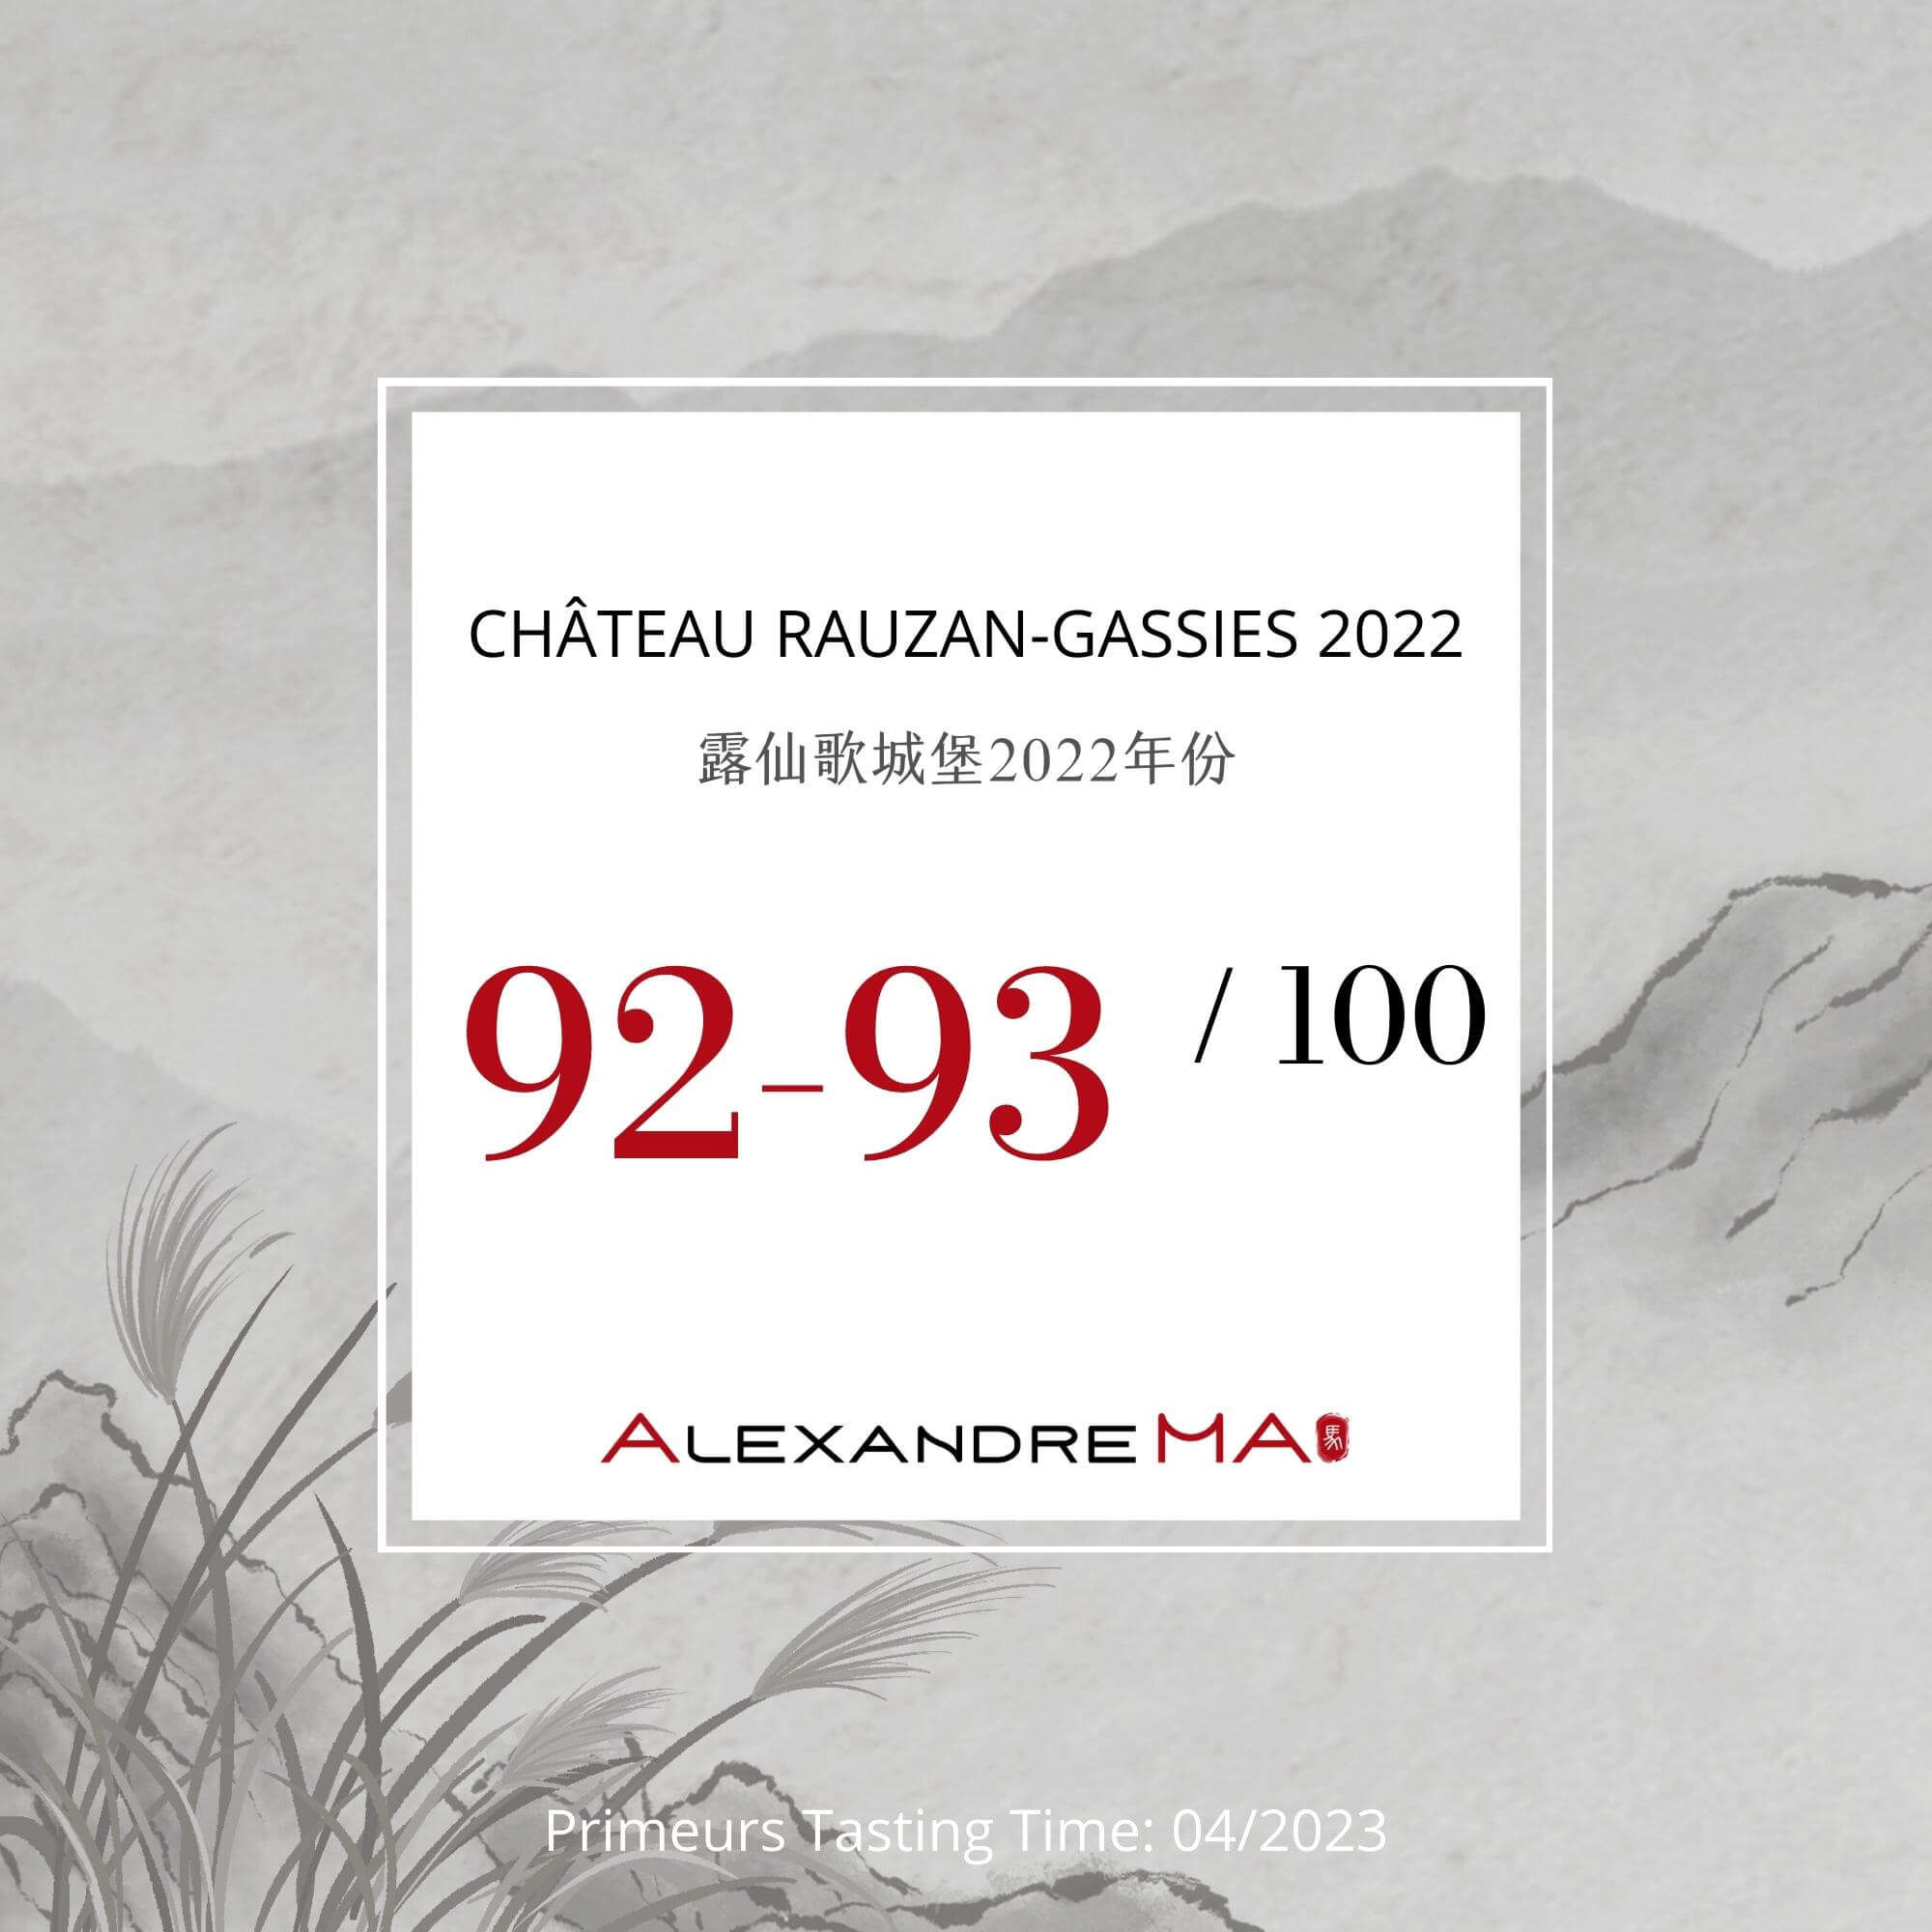 Château Rauzan-Gassies 2022 Primeurs - Alexandre MA